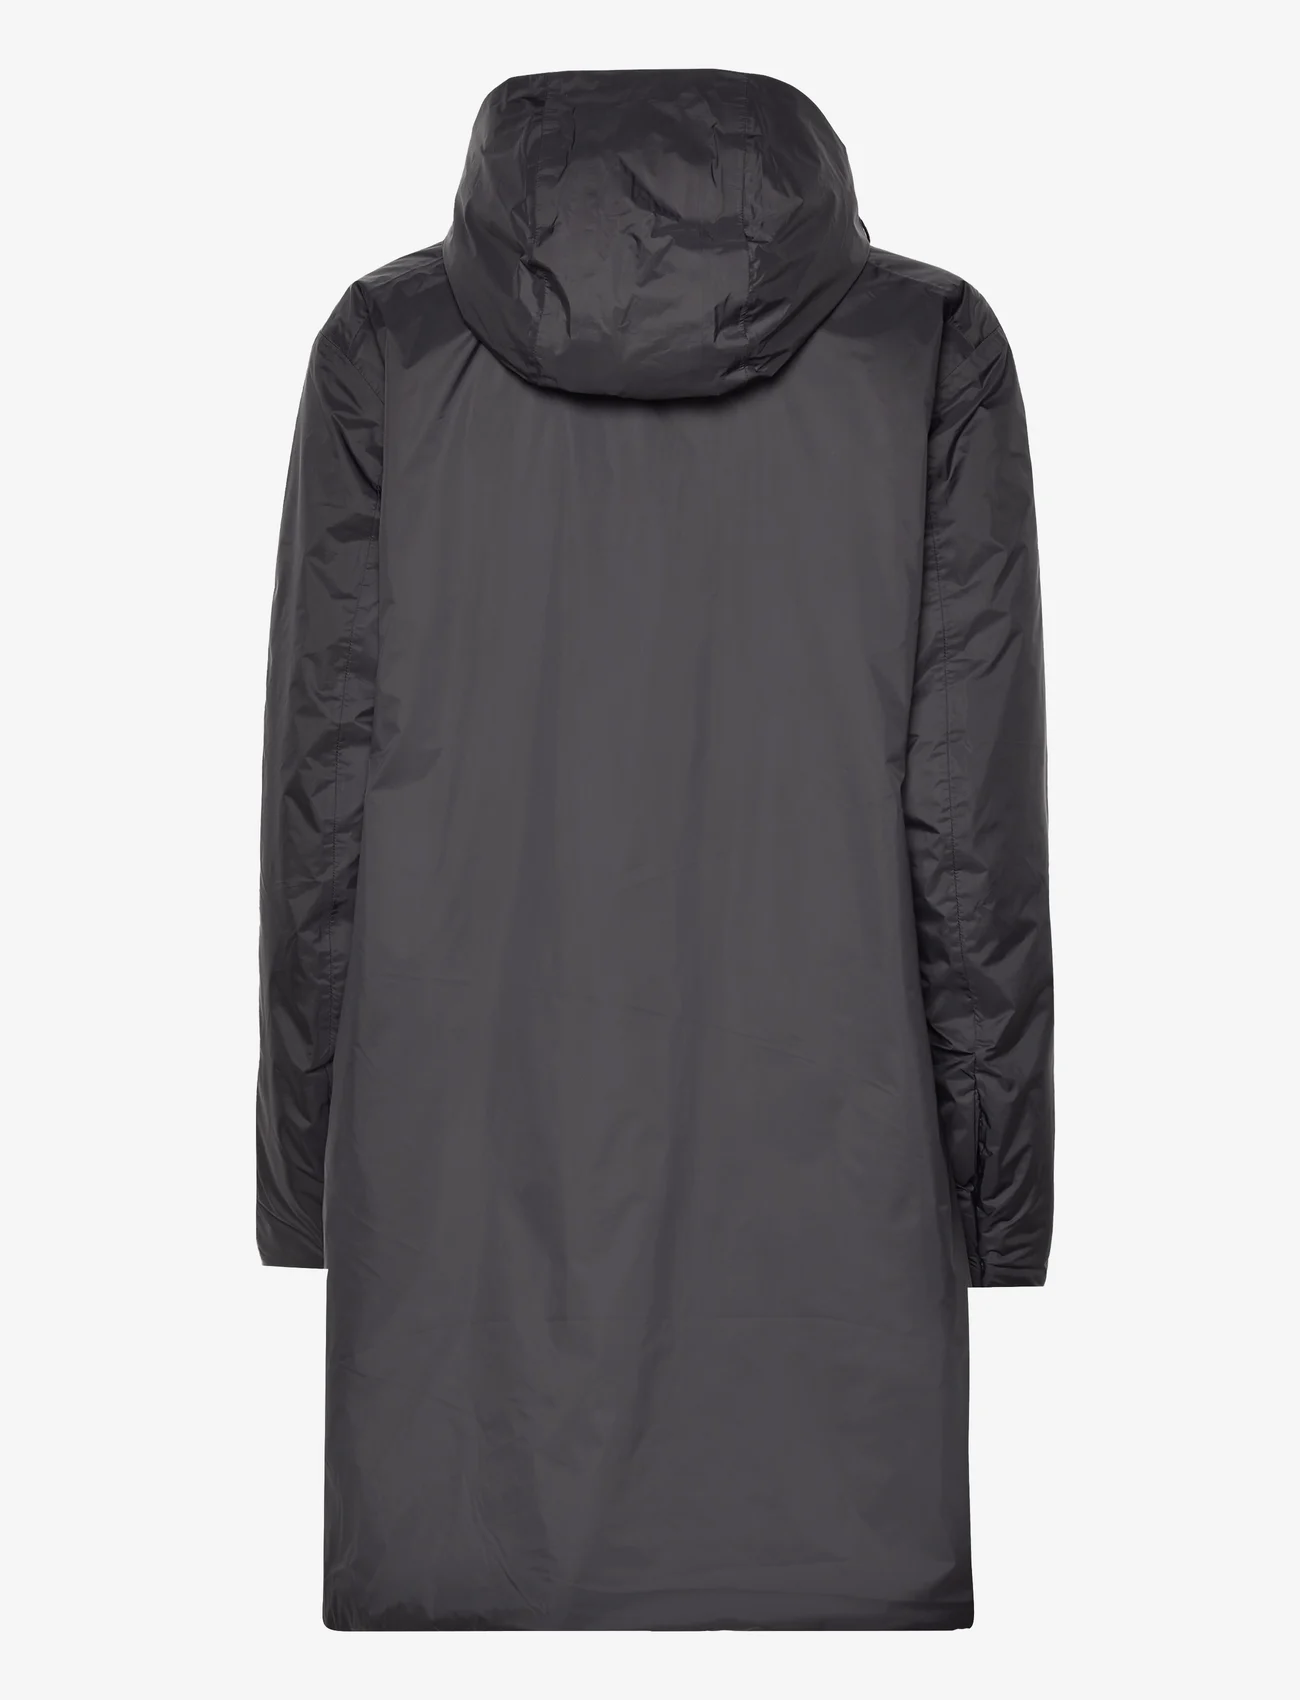 Tenson - Transition Coat Woman - rain coats - black - 1